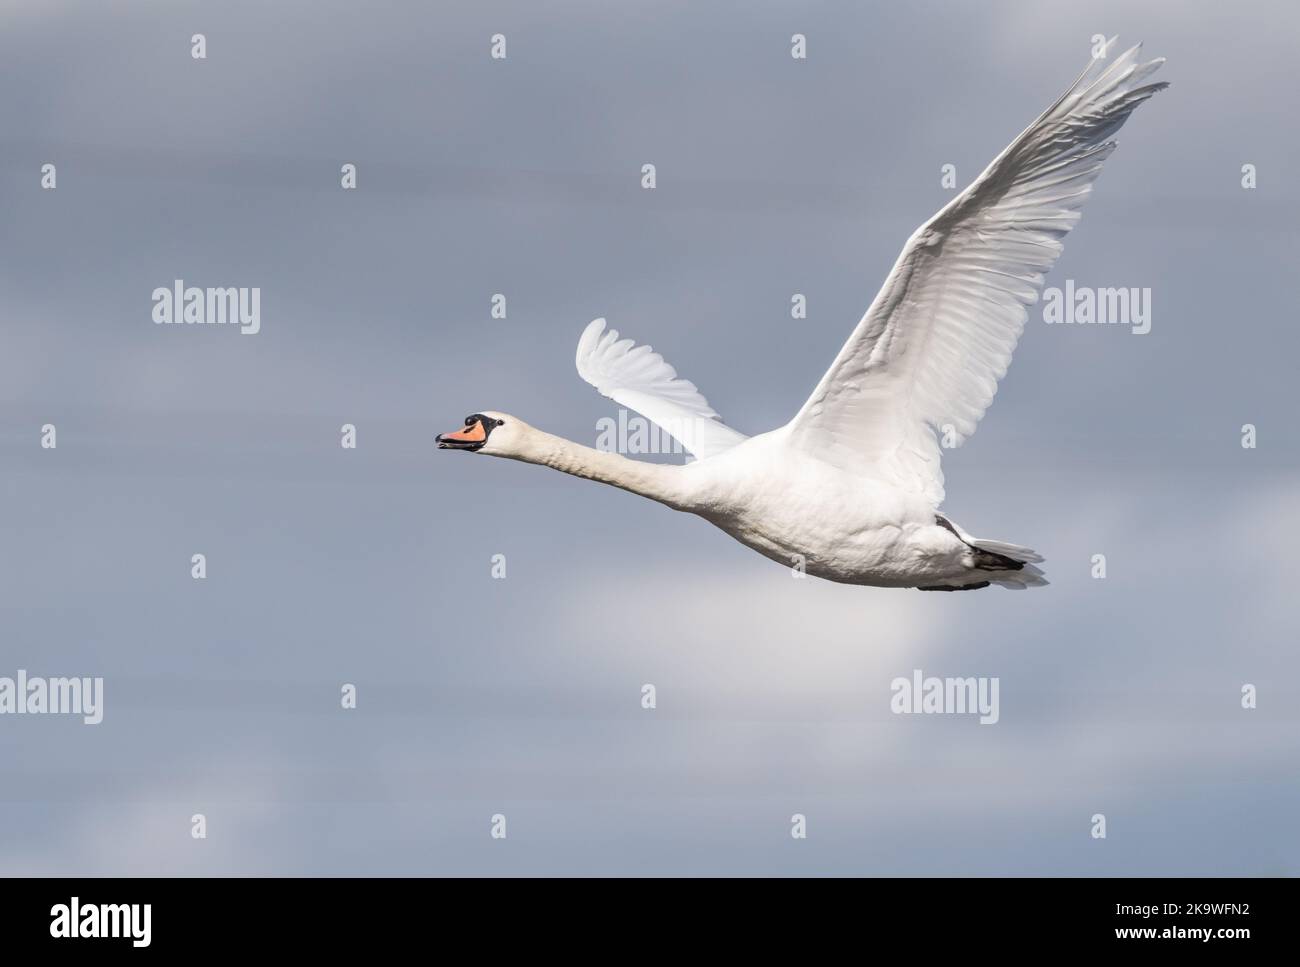 Flying Cisne (Cygnus olor) Foto de stock